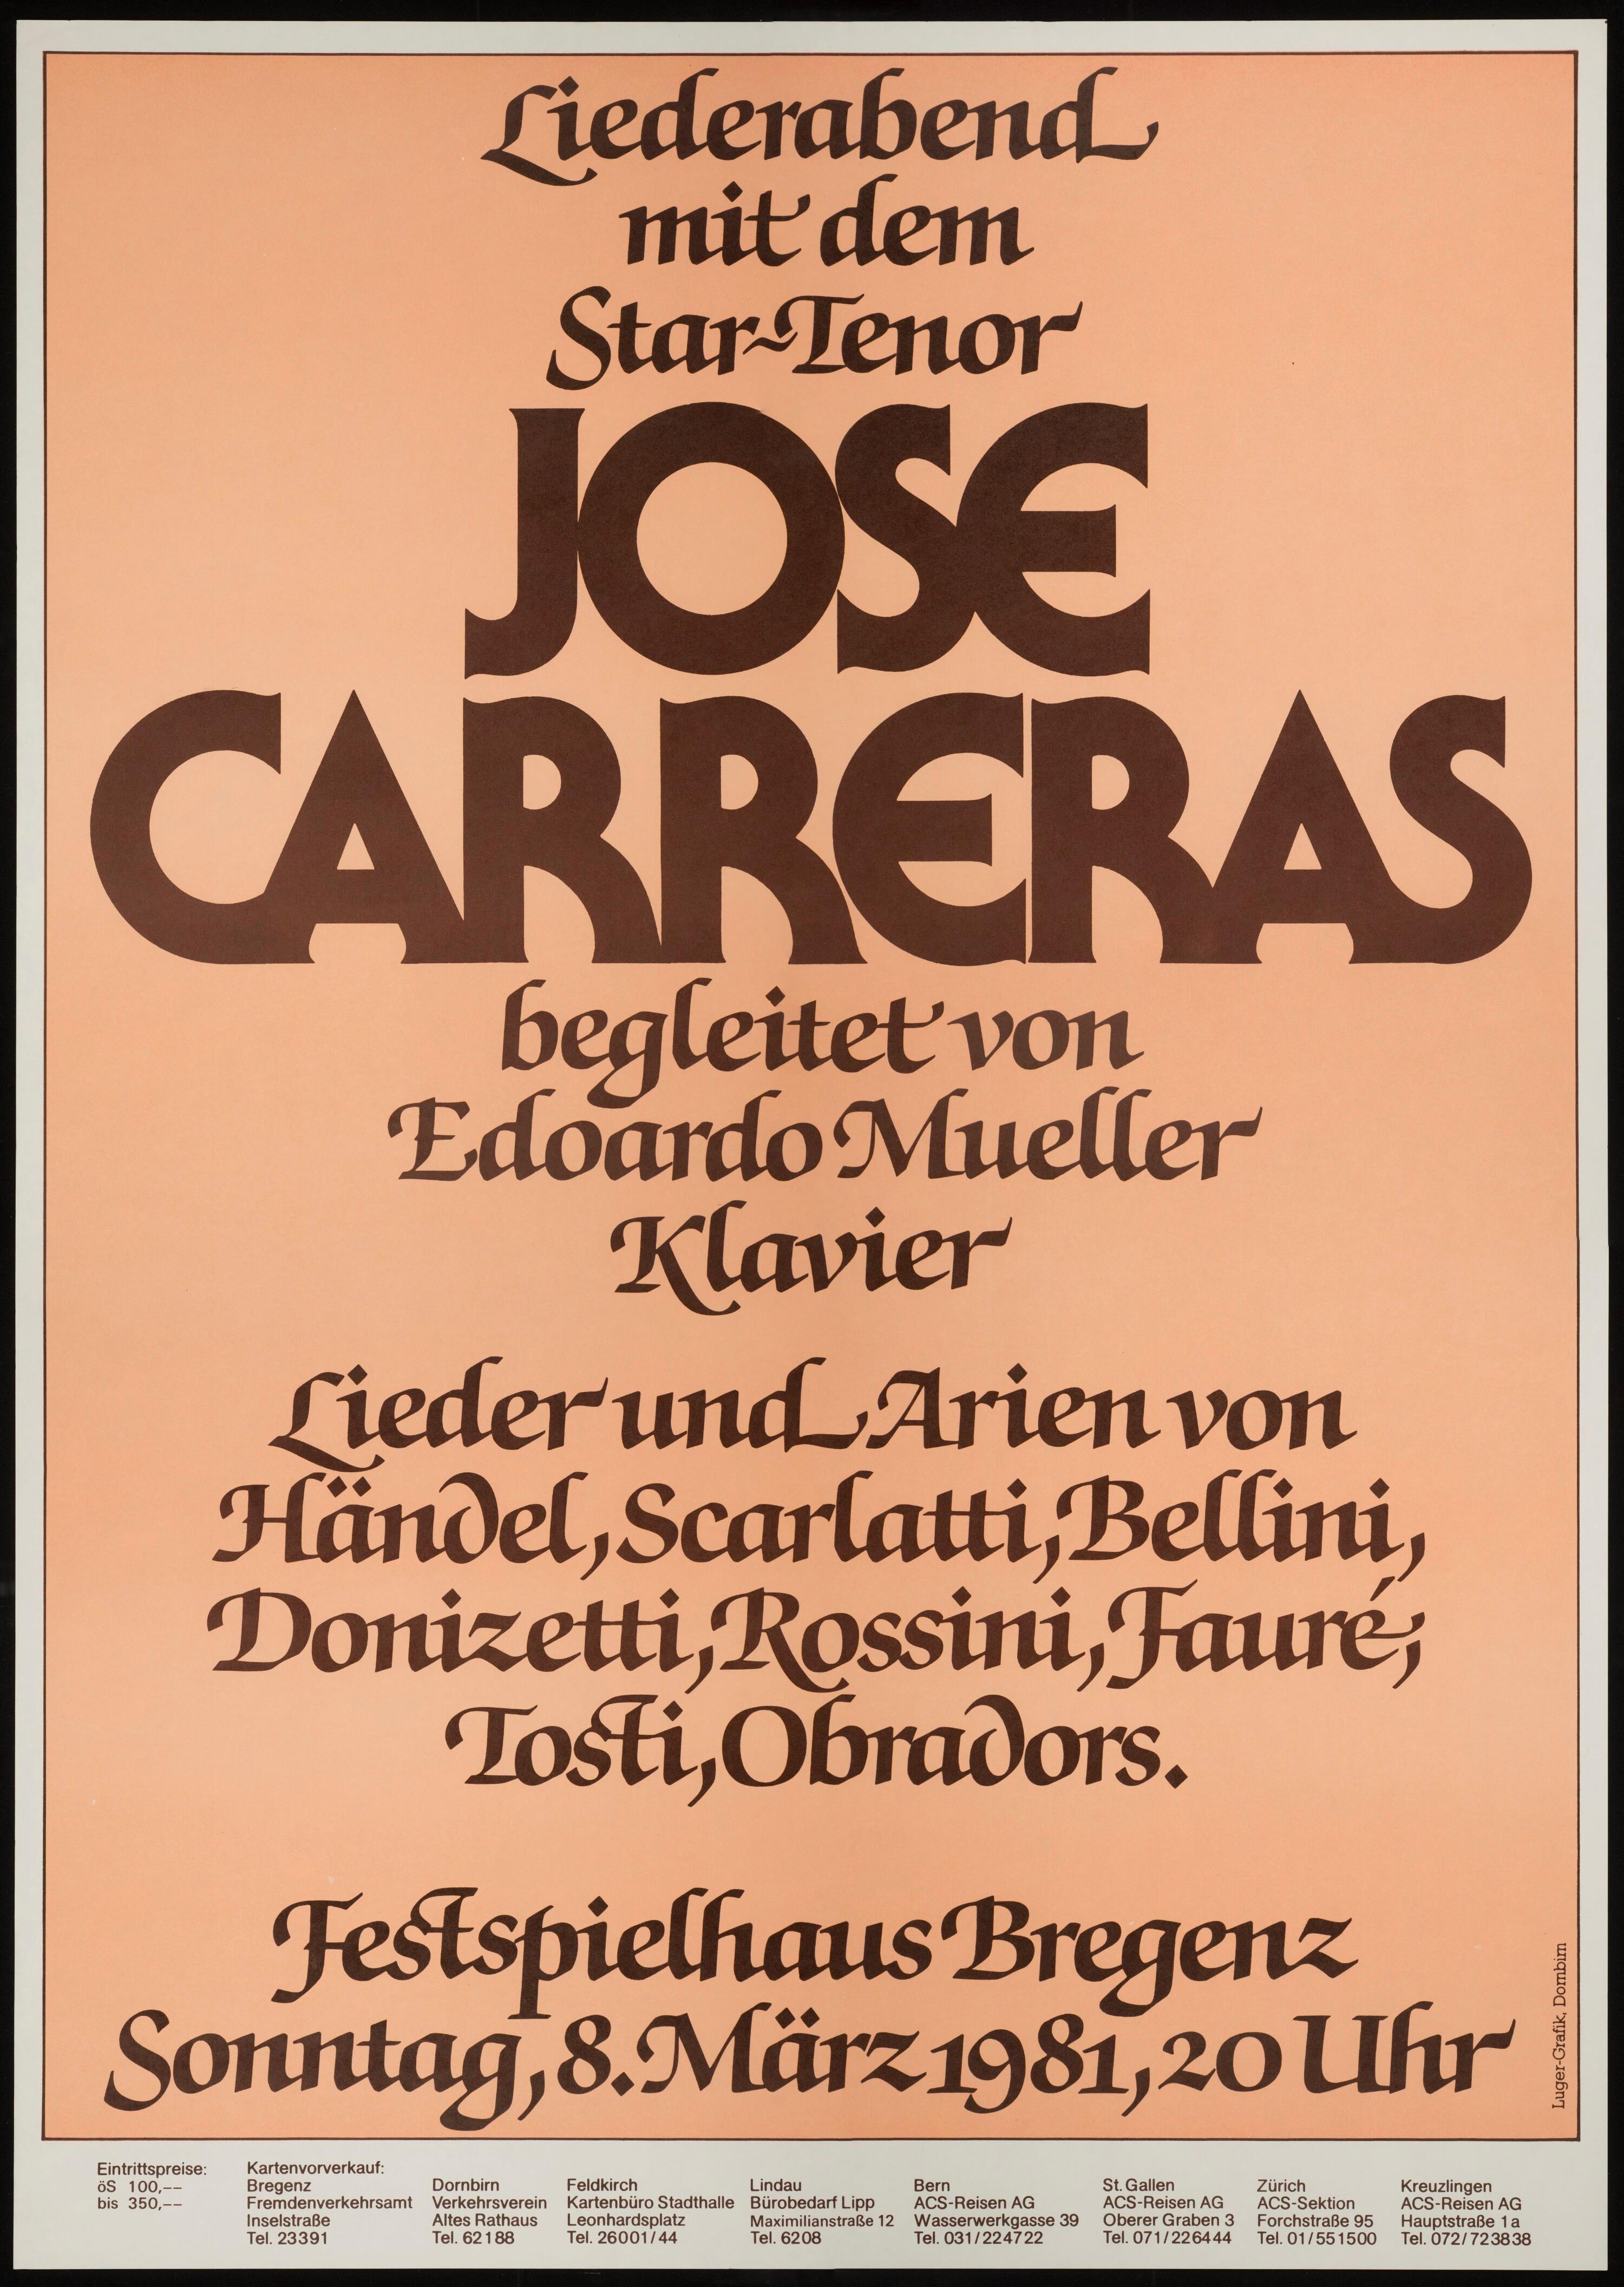 Liederabend mit dem Star-Tenor Jose Carreras></div>


    <hr>
    <div class=